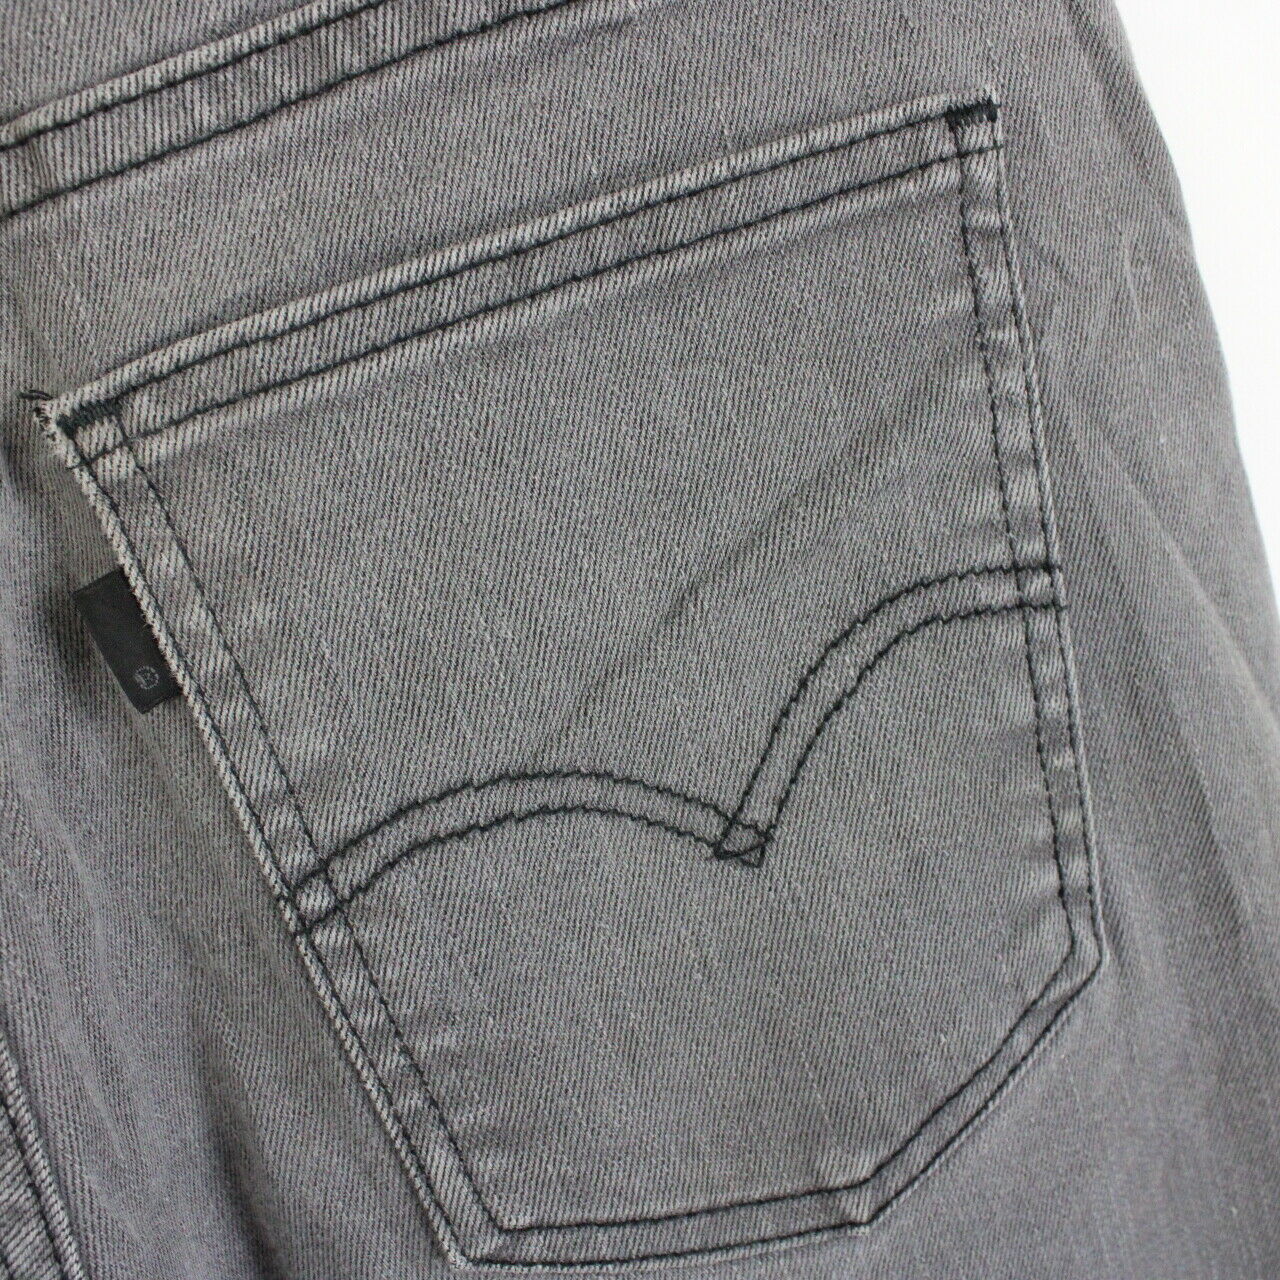 LEVIS 508 Jeans Grey | W32 L30